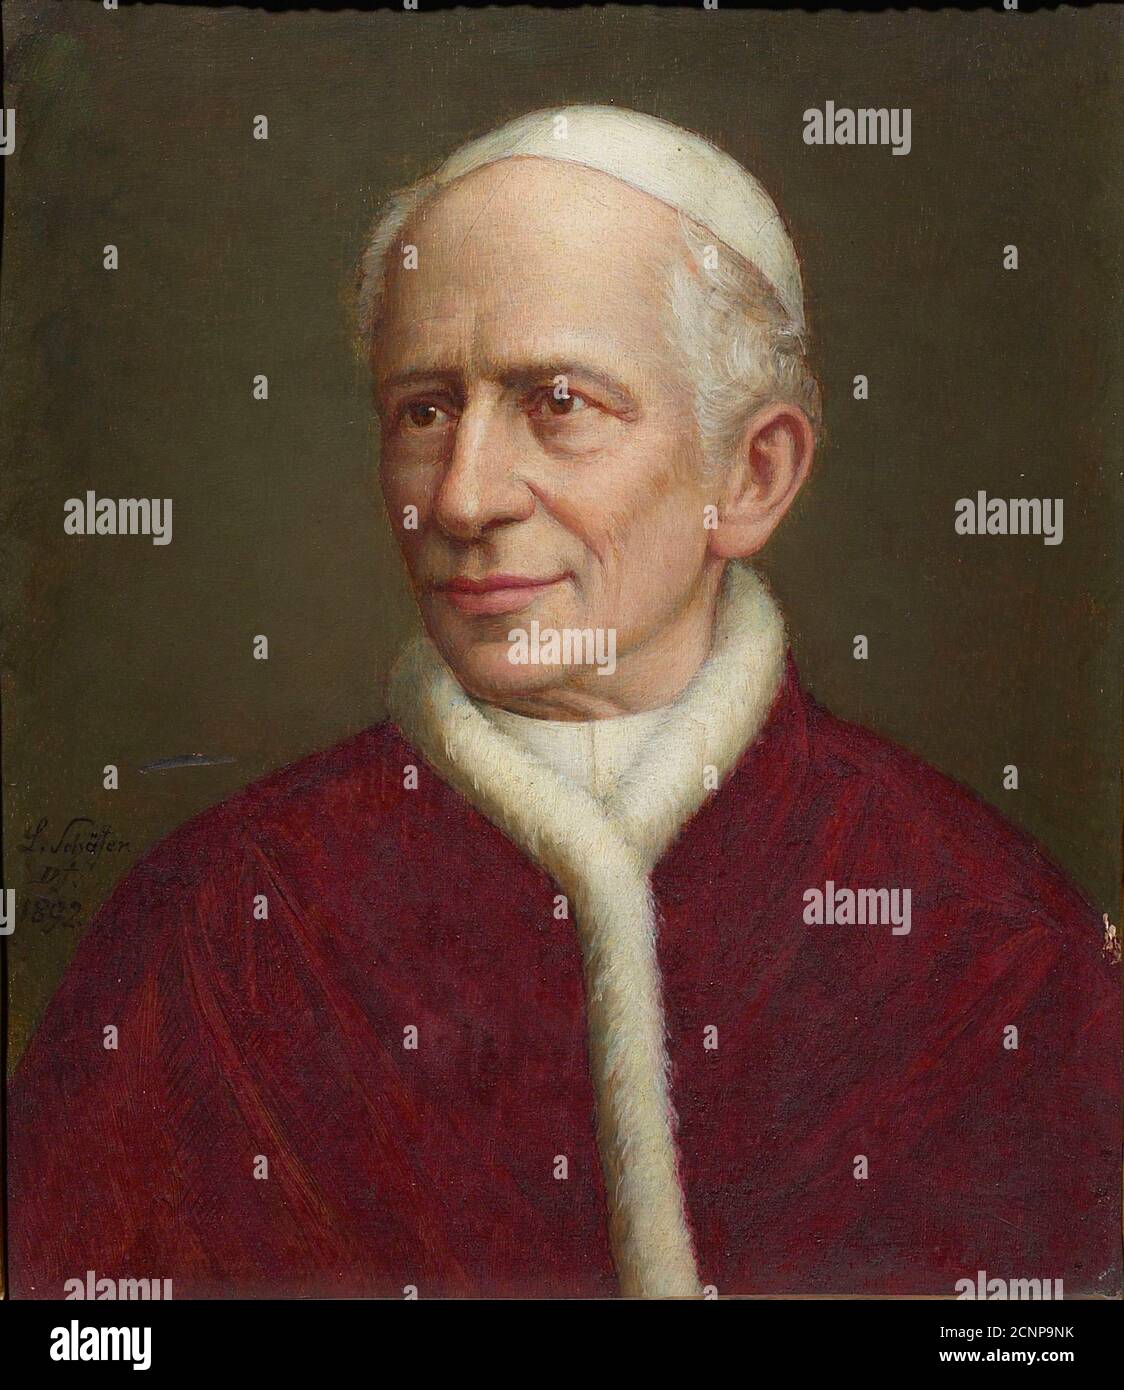 Portrait of the Pope Leo XIII (1810-1903), 1892. Found in the collection of Abdij Onze-Lieve-Vrouw, Tongerlo. Stock Photo